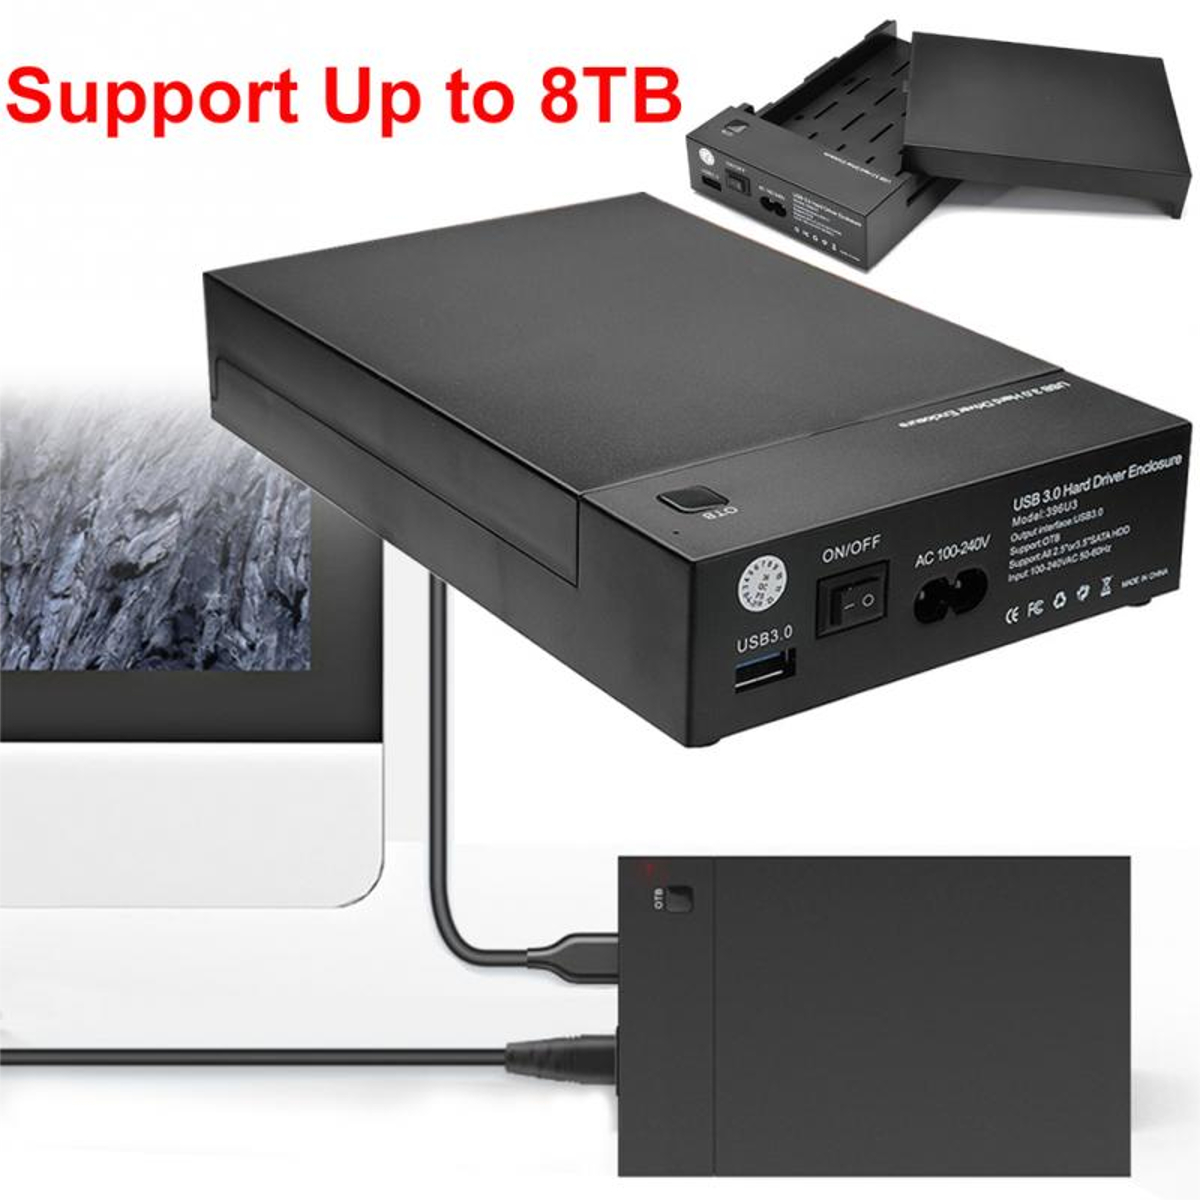 USB3.0 To SATA Serial Hard Disk External Box Enclosure Case For 2.5/3.5 inch HDD SSD Hard Drive 87